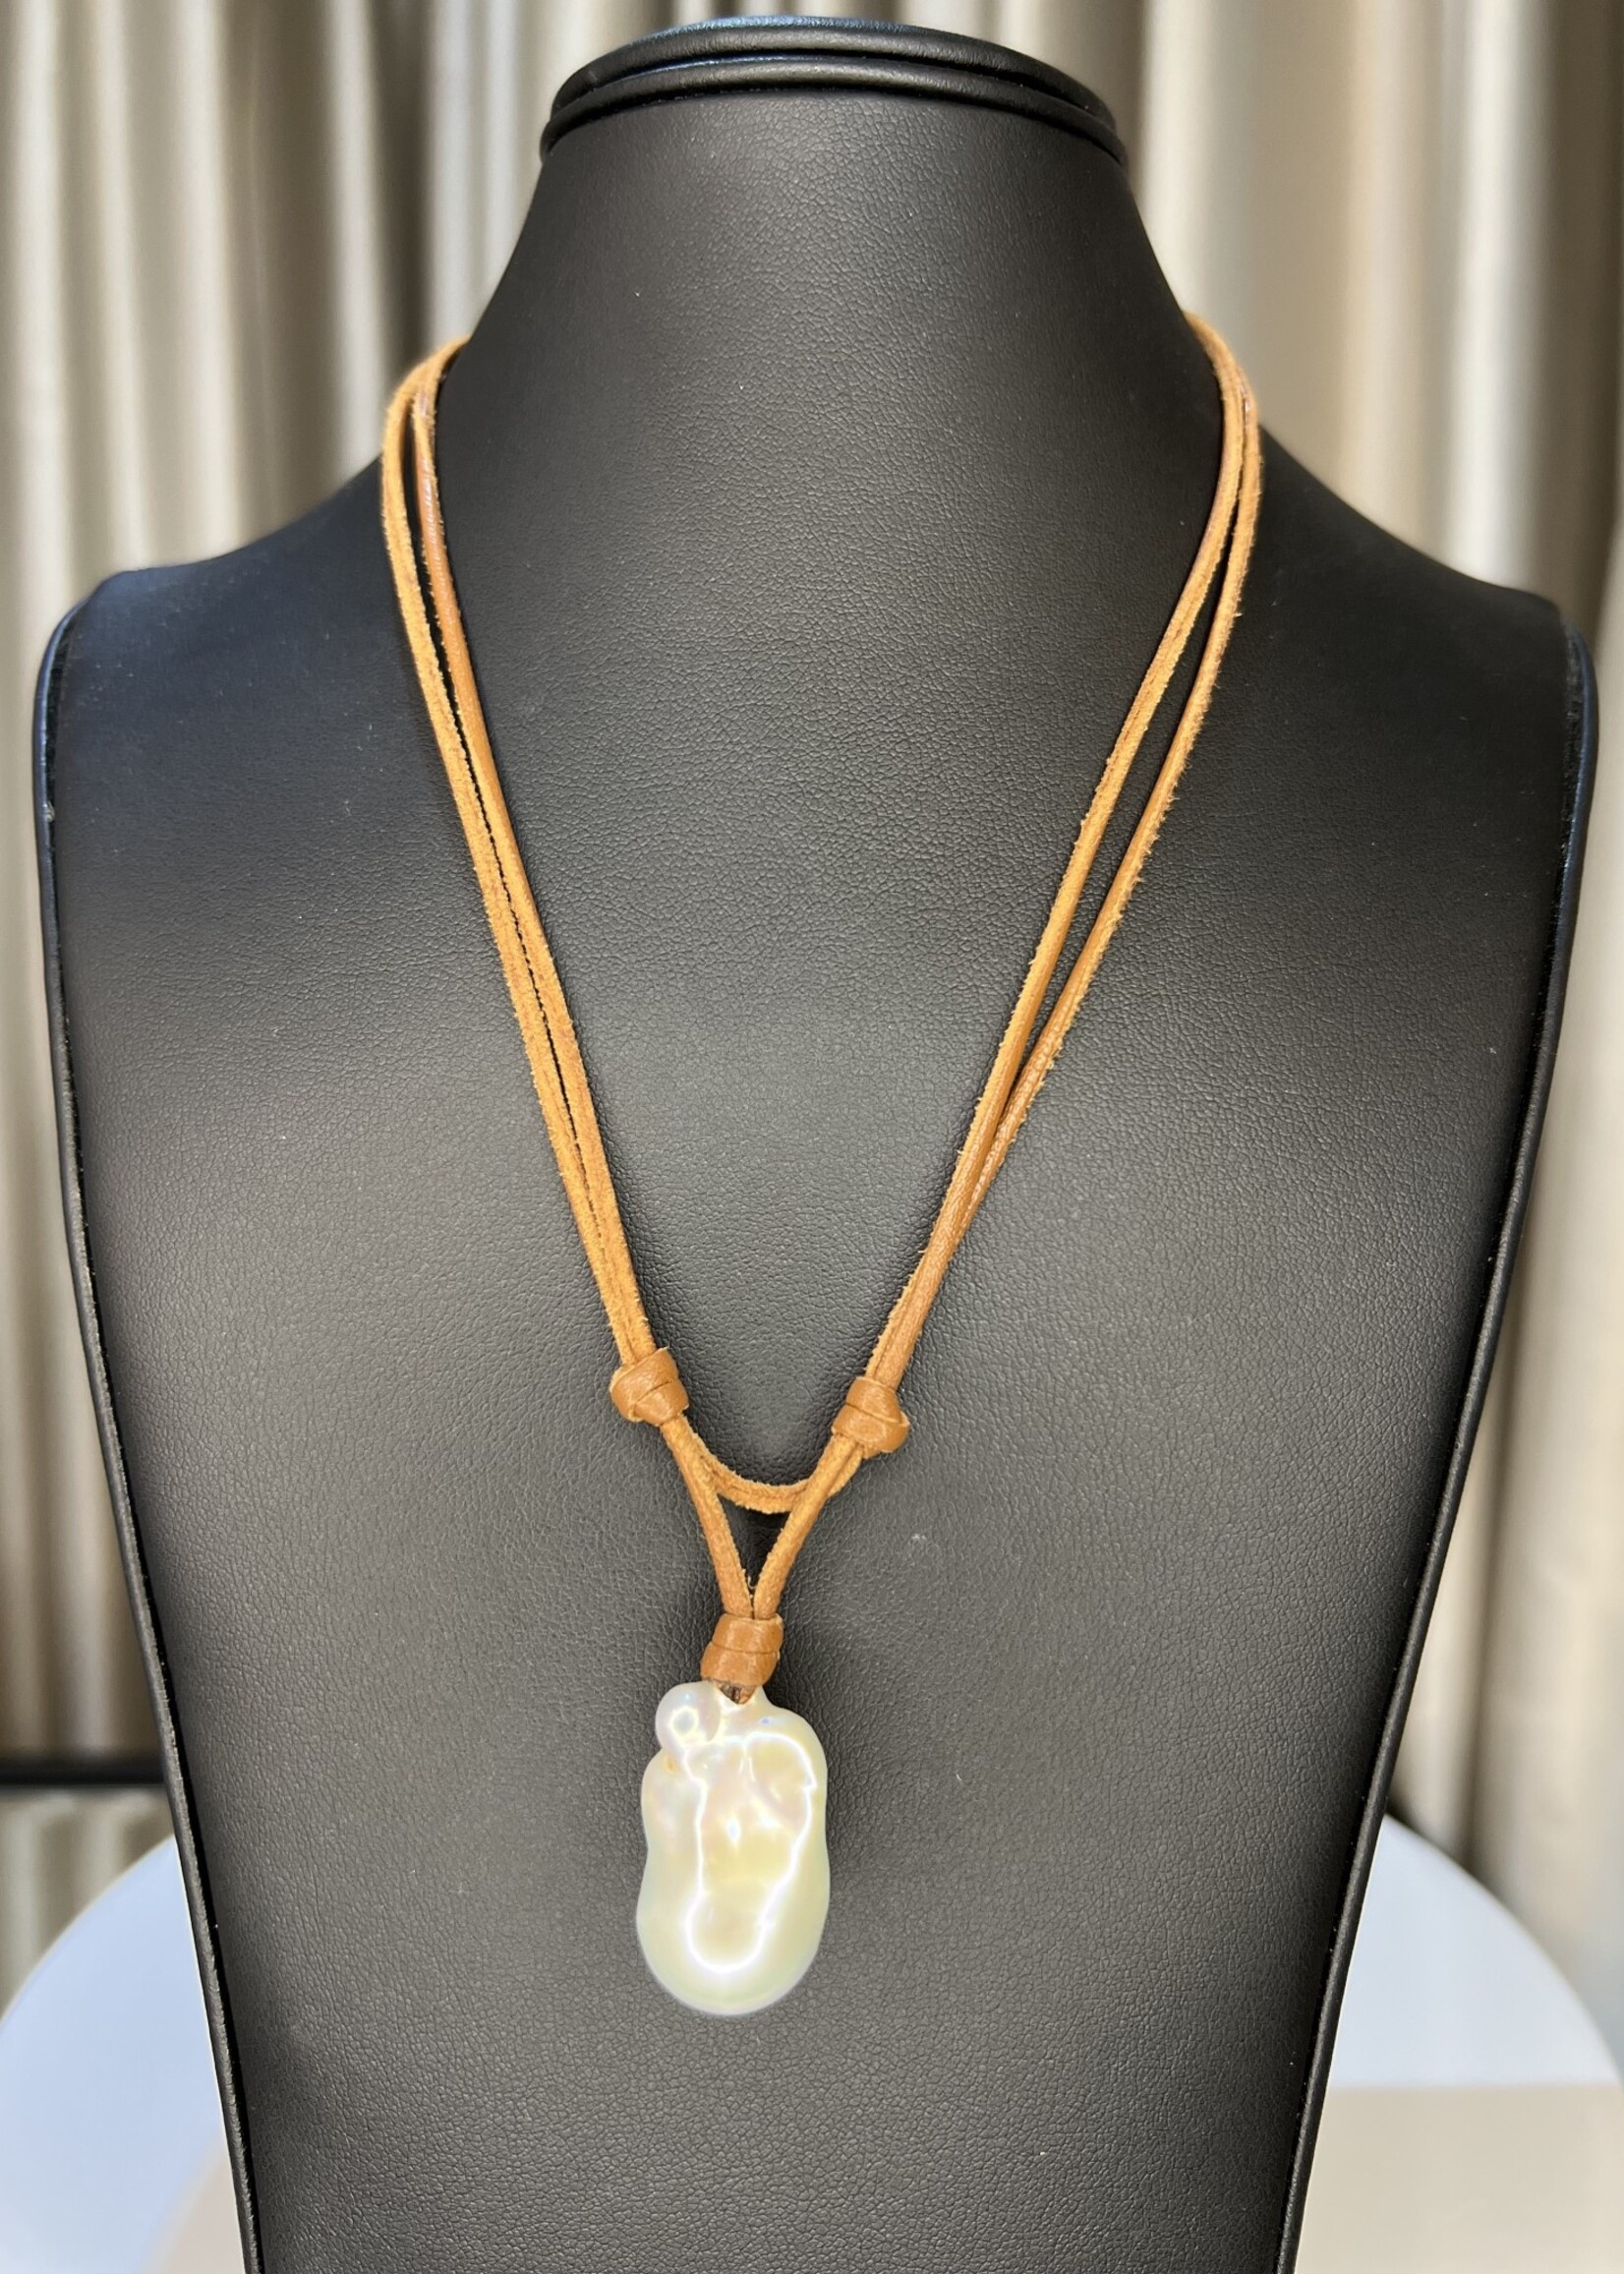 Mina Danielle White Baroque Pearl on double strand light brown leather cord. Pearl button closure.